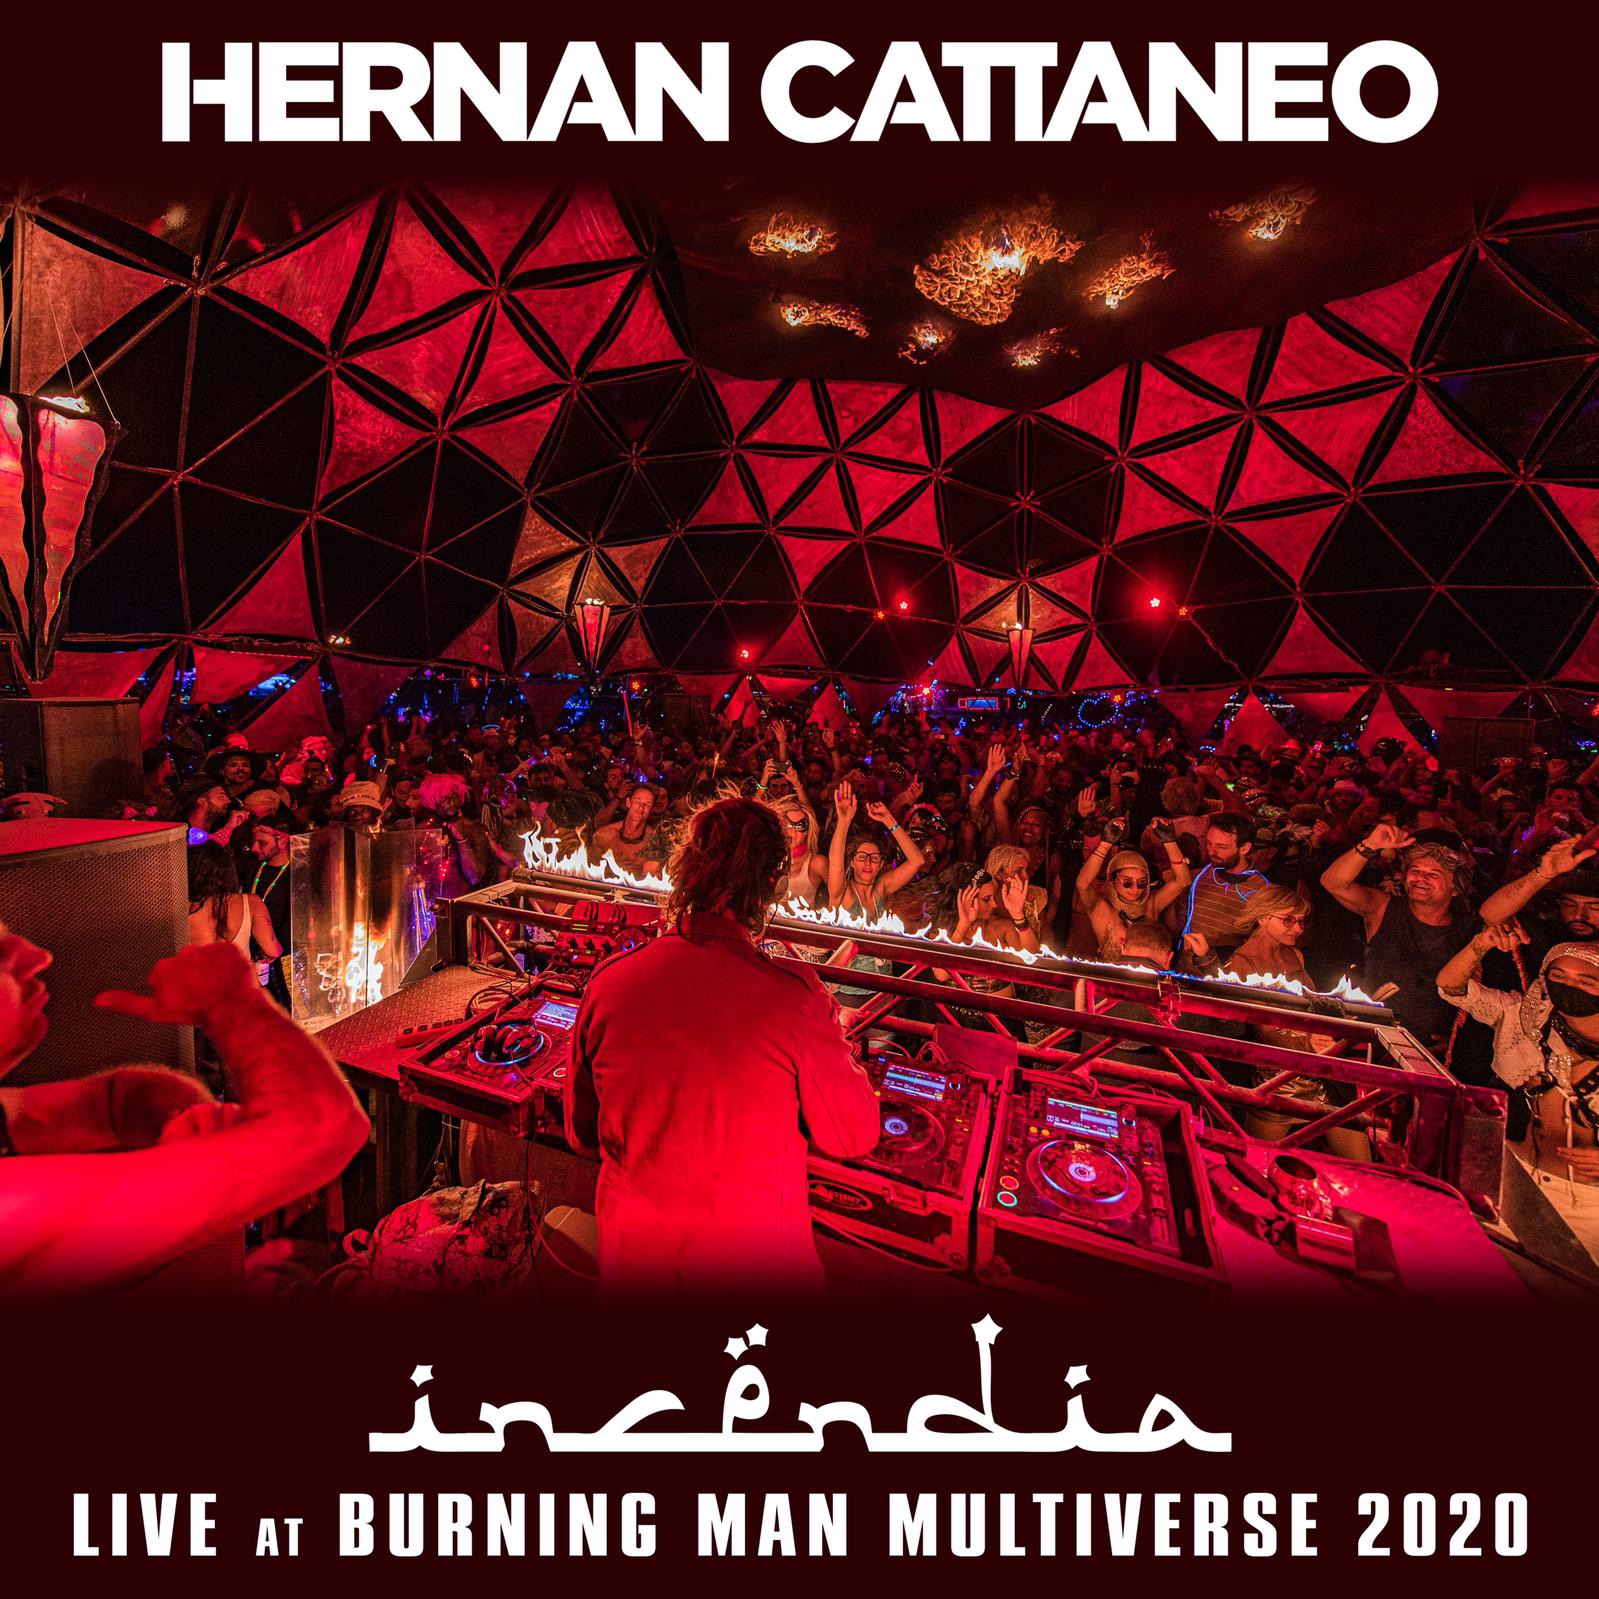 HERNAN CATTANEO - BURNING MAN MULTIVERSE 2020 - INCENDIA DOME